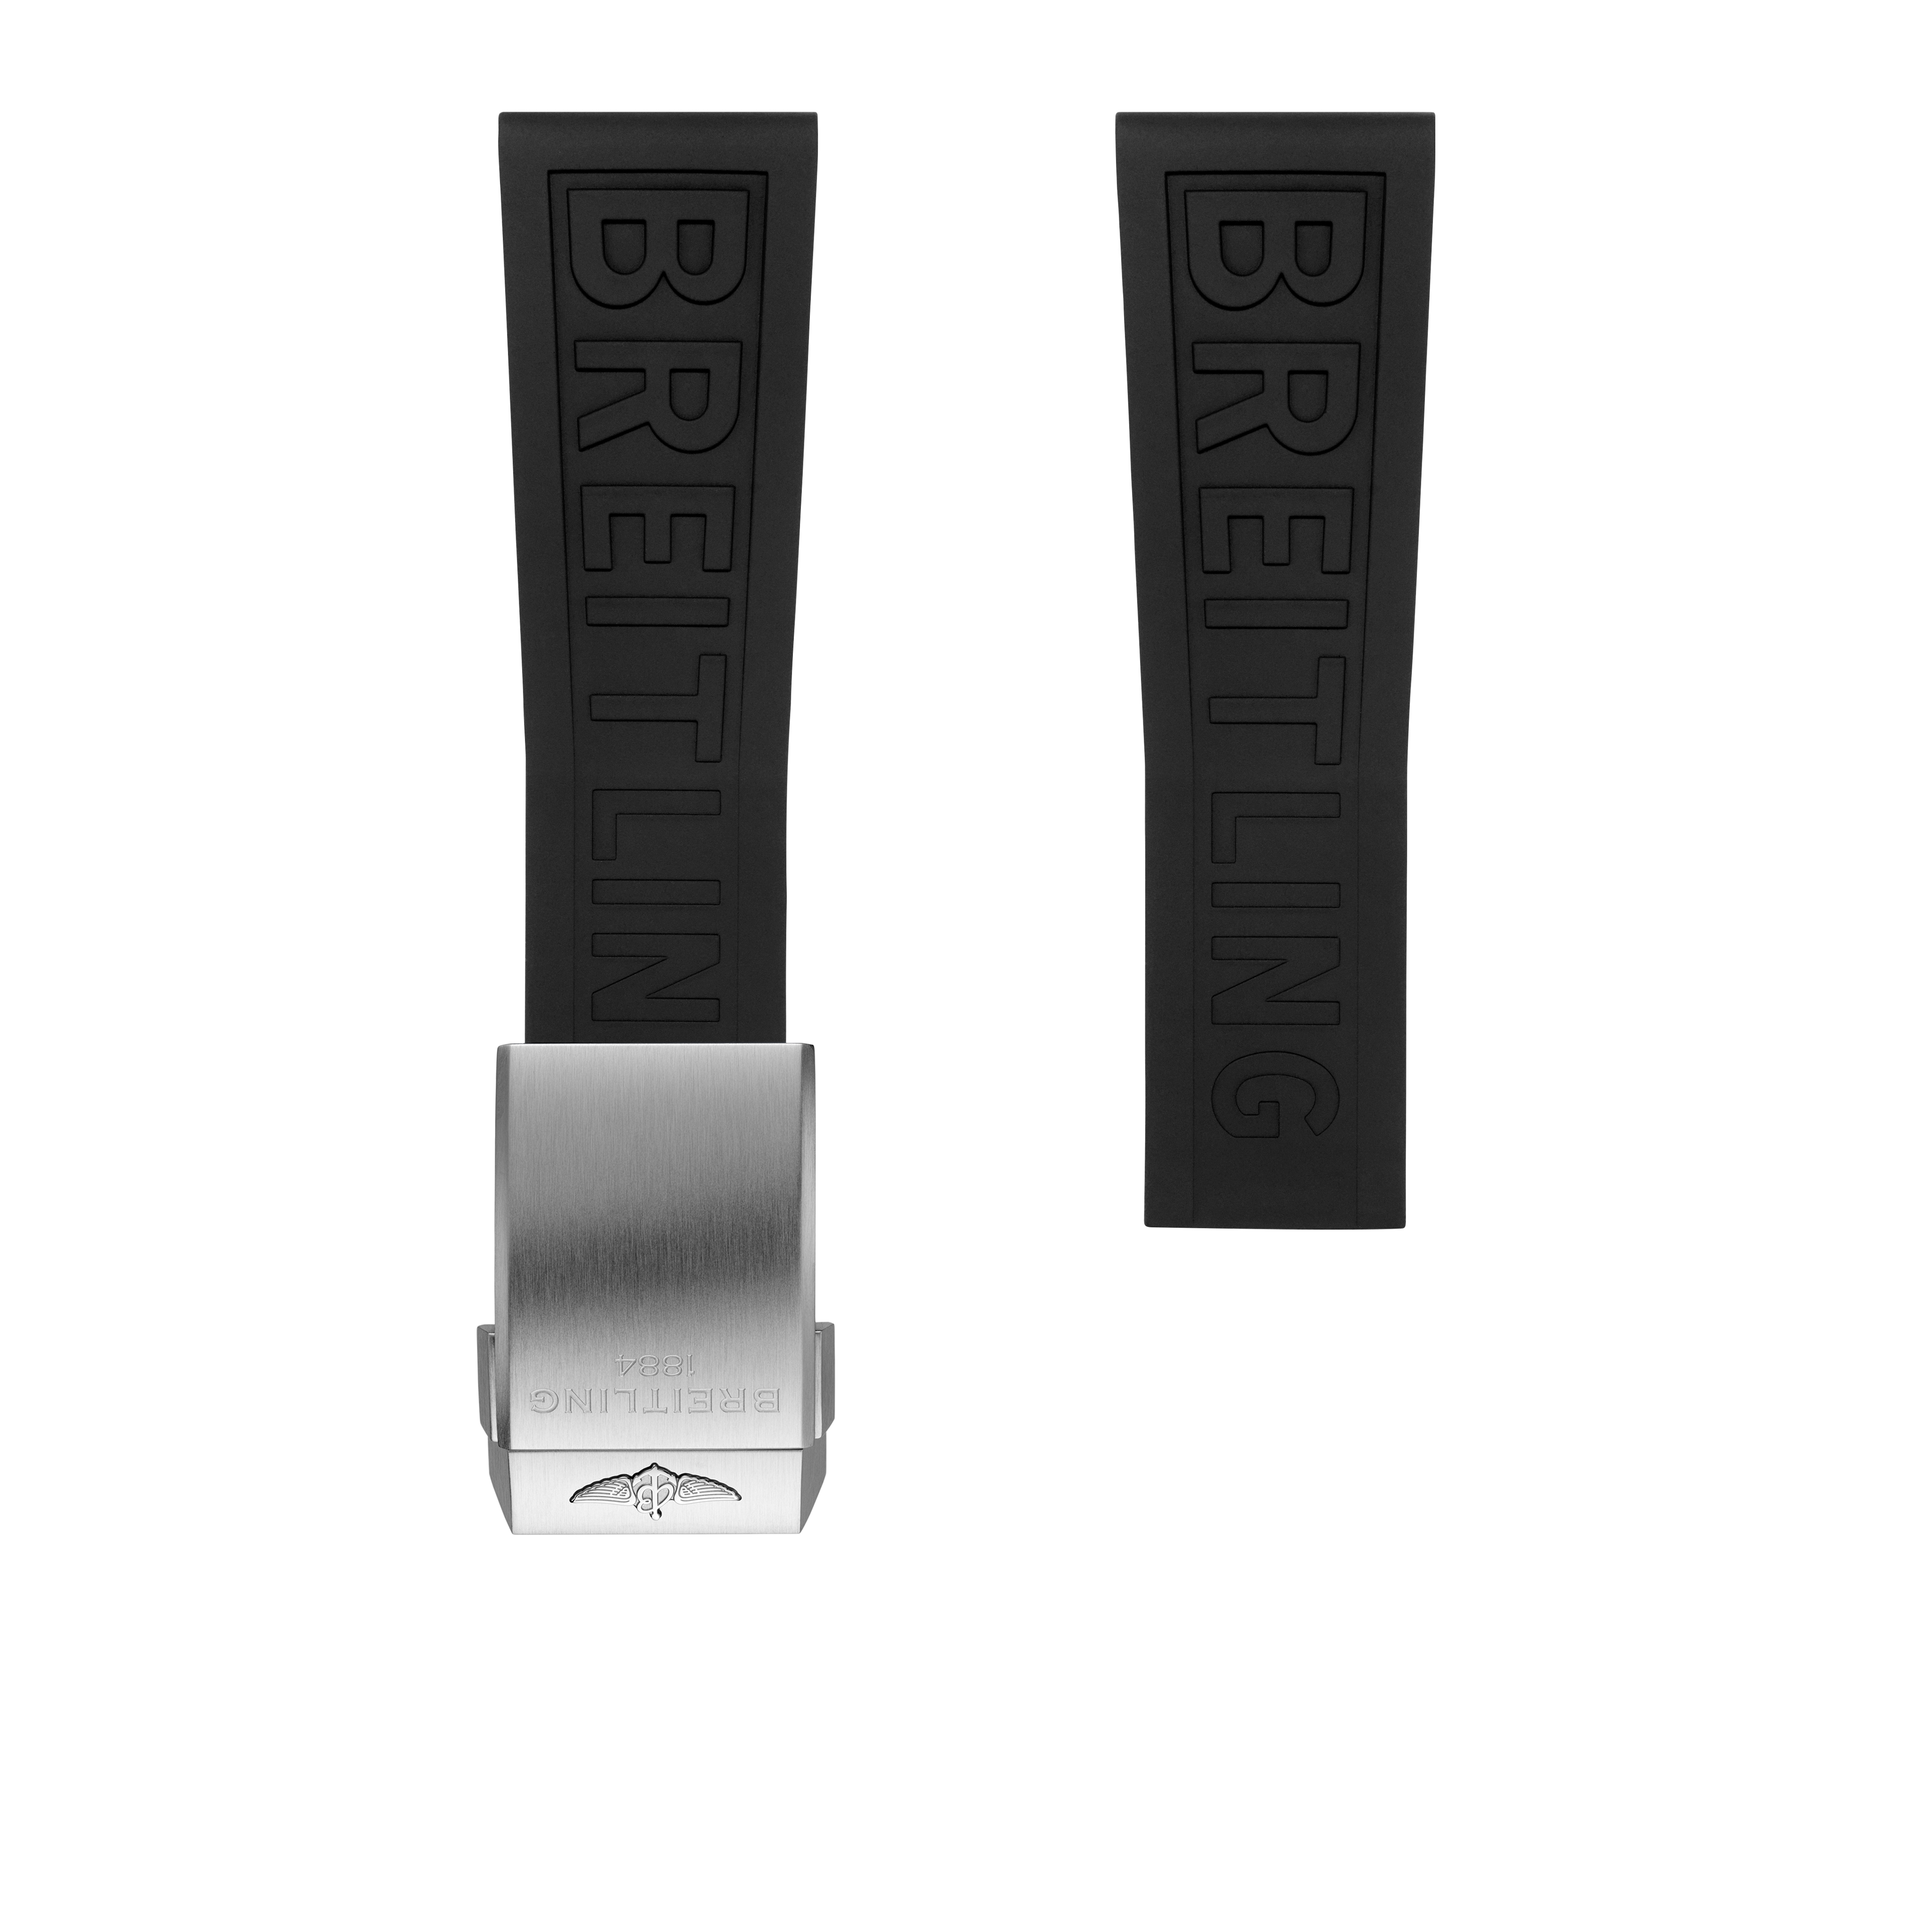 Bracelete de borracha Diver Pro preta - 24 mm